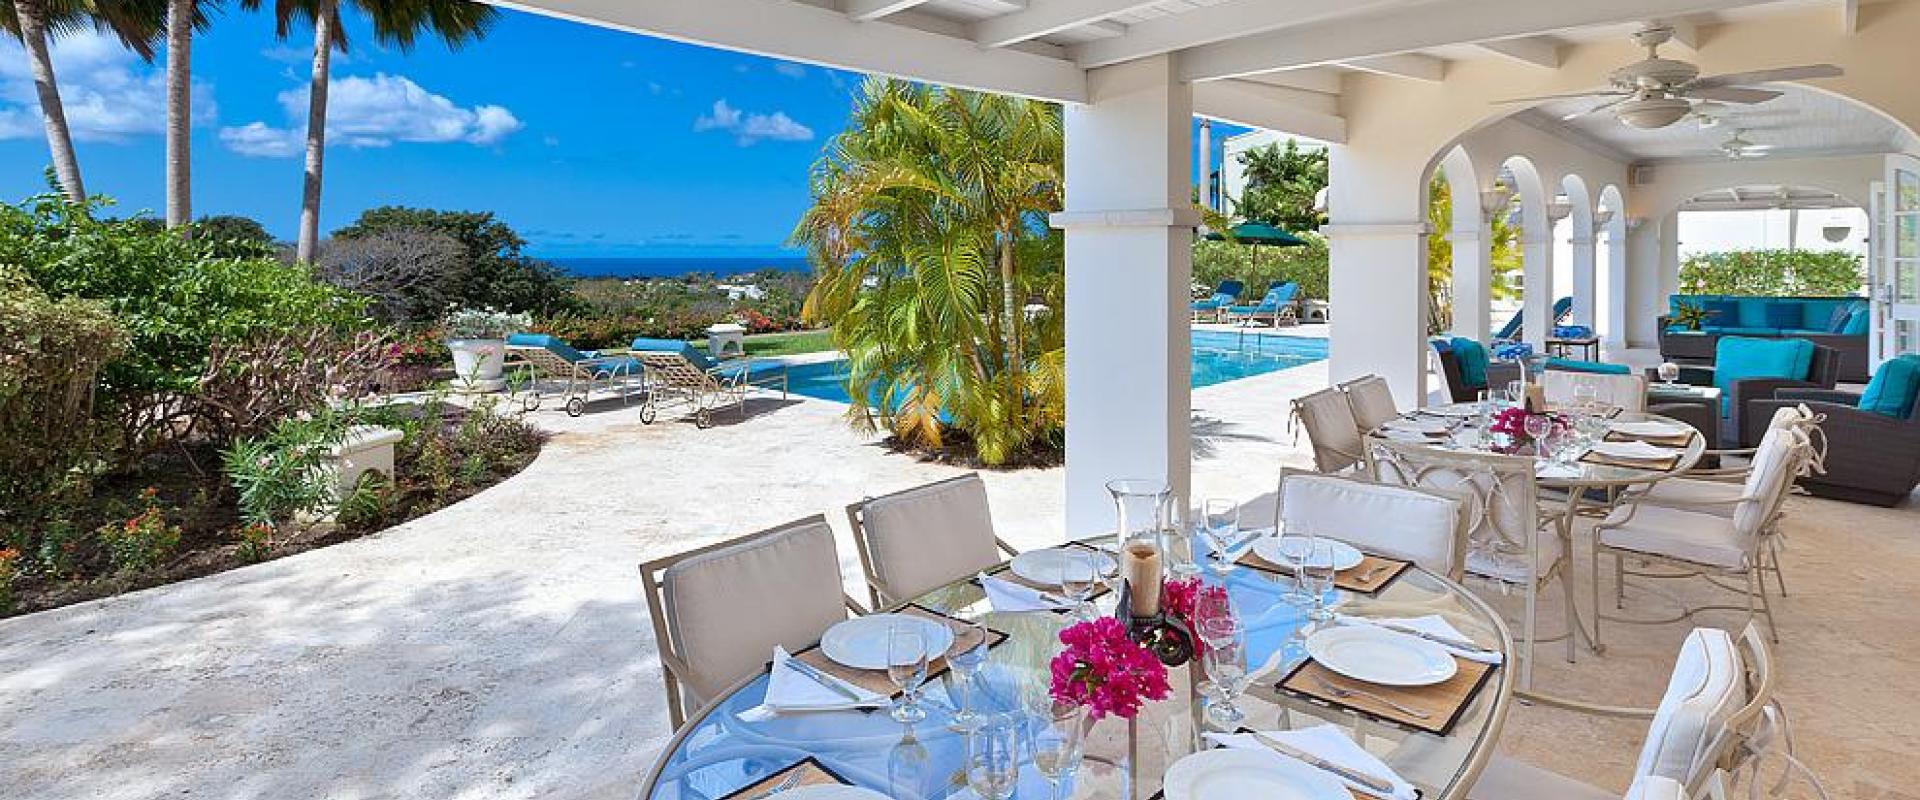 Royal Westmoreland, Benjoli Breeze House/Villa For Rent in Barbados